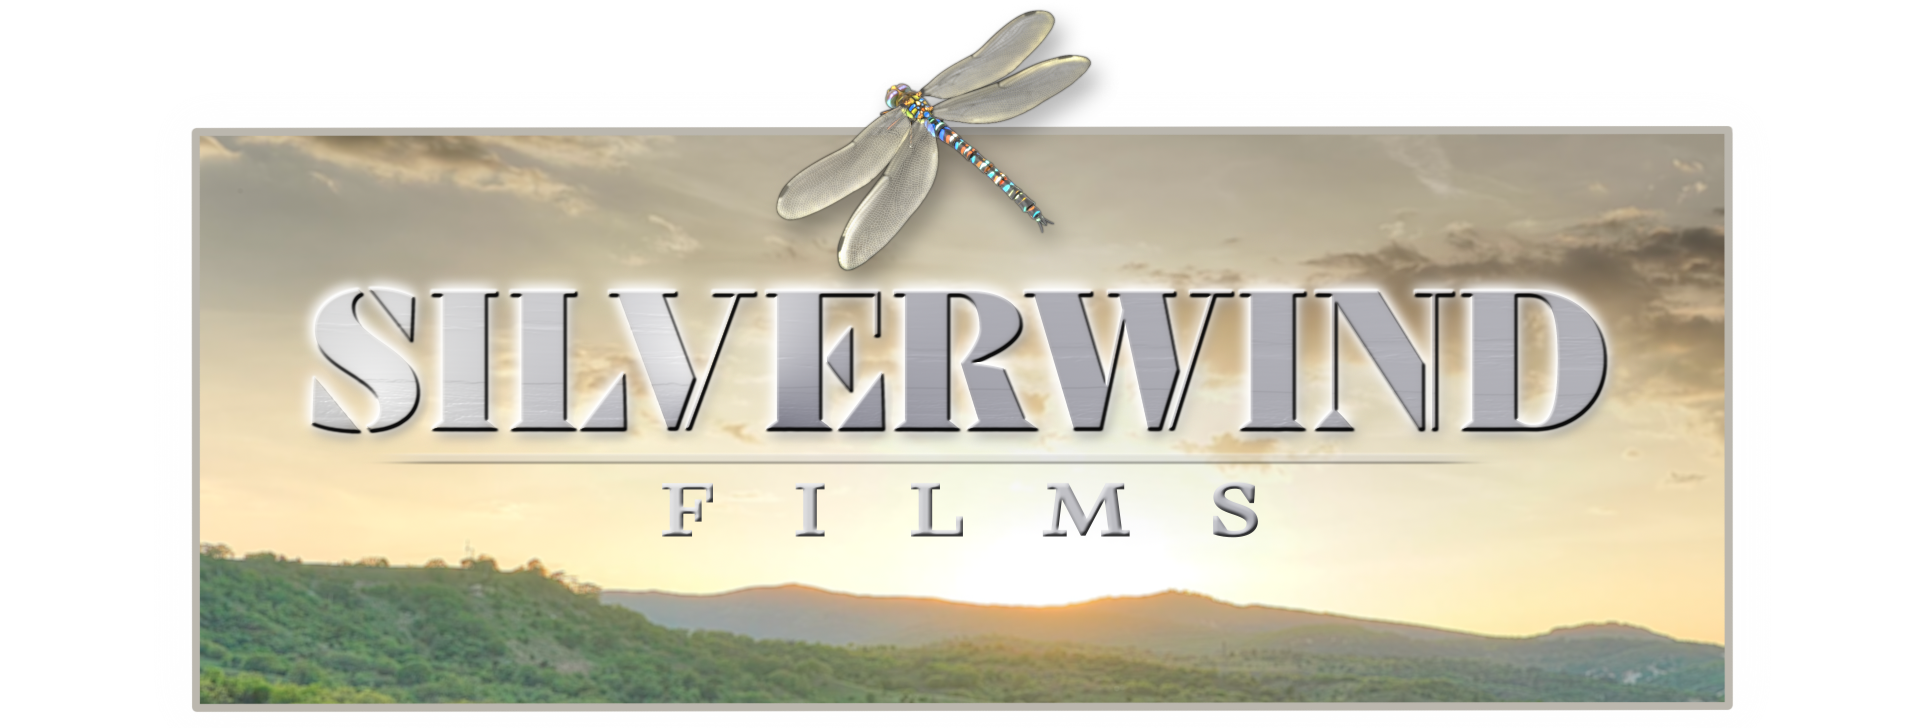 Silverwind Films llc